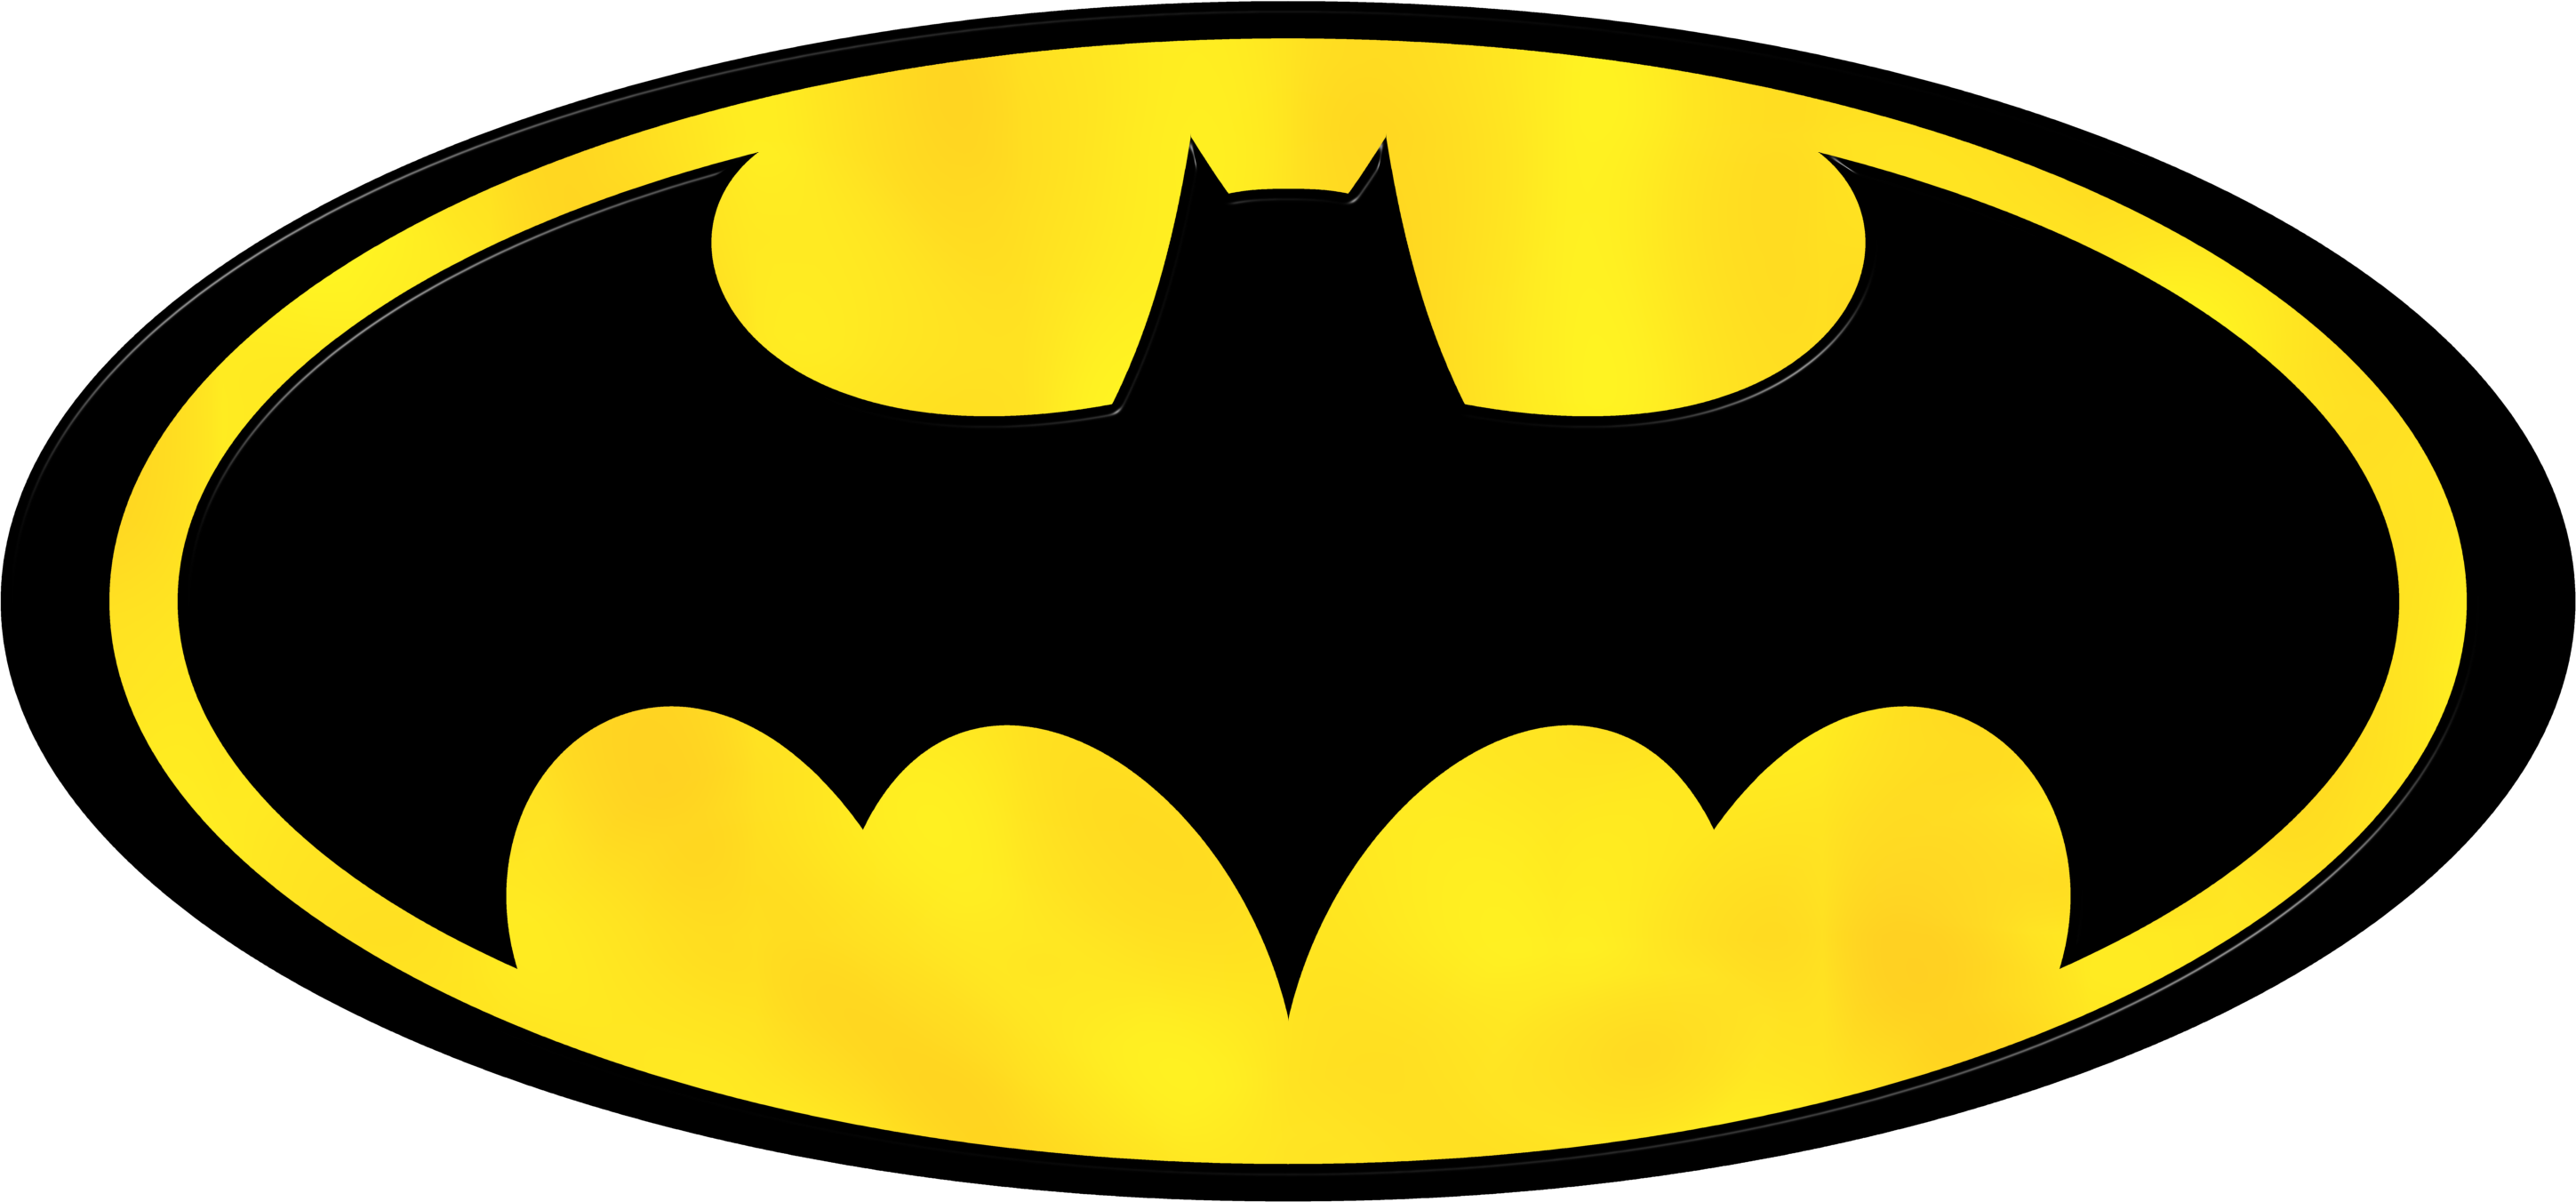 Batman Logos - Cliparts.co